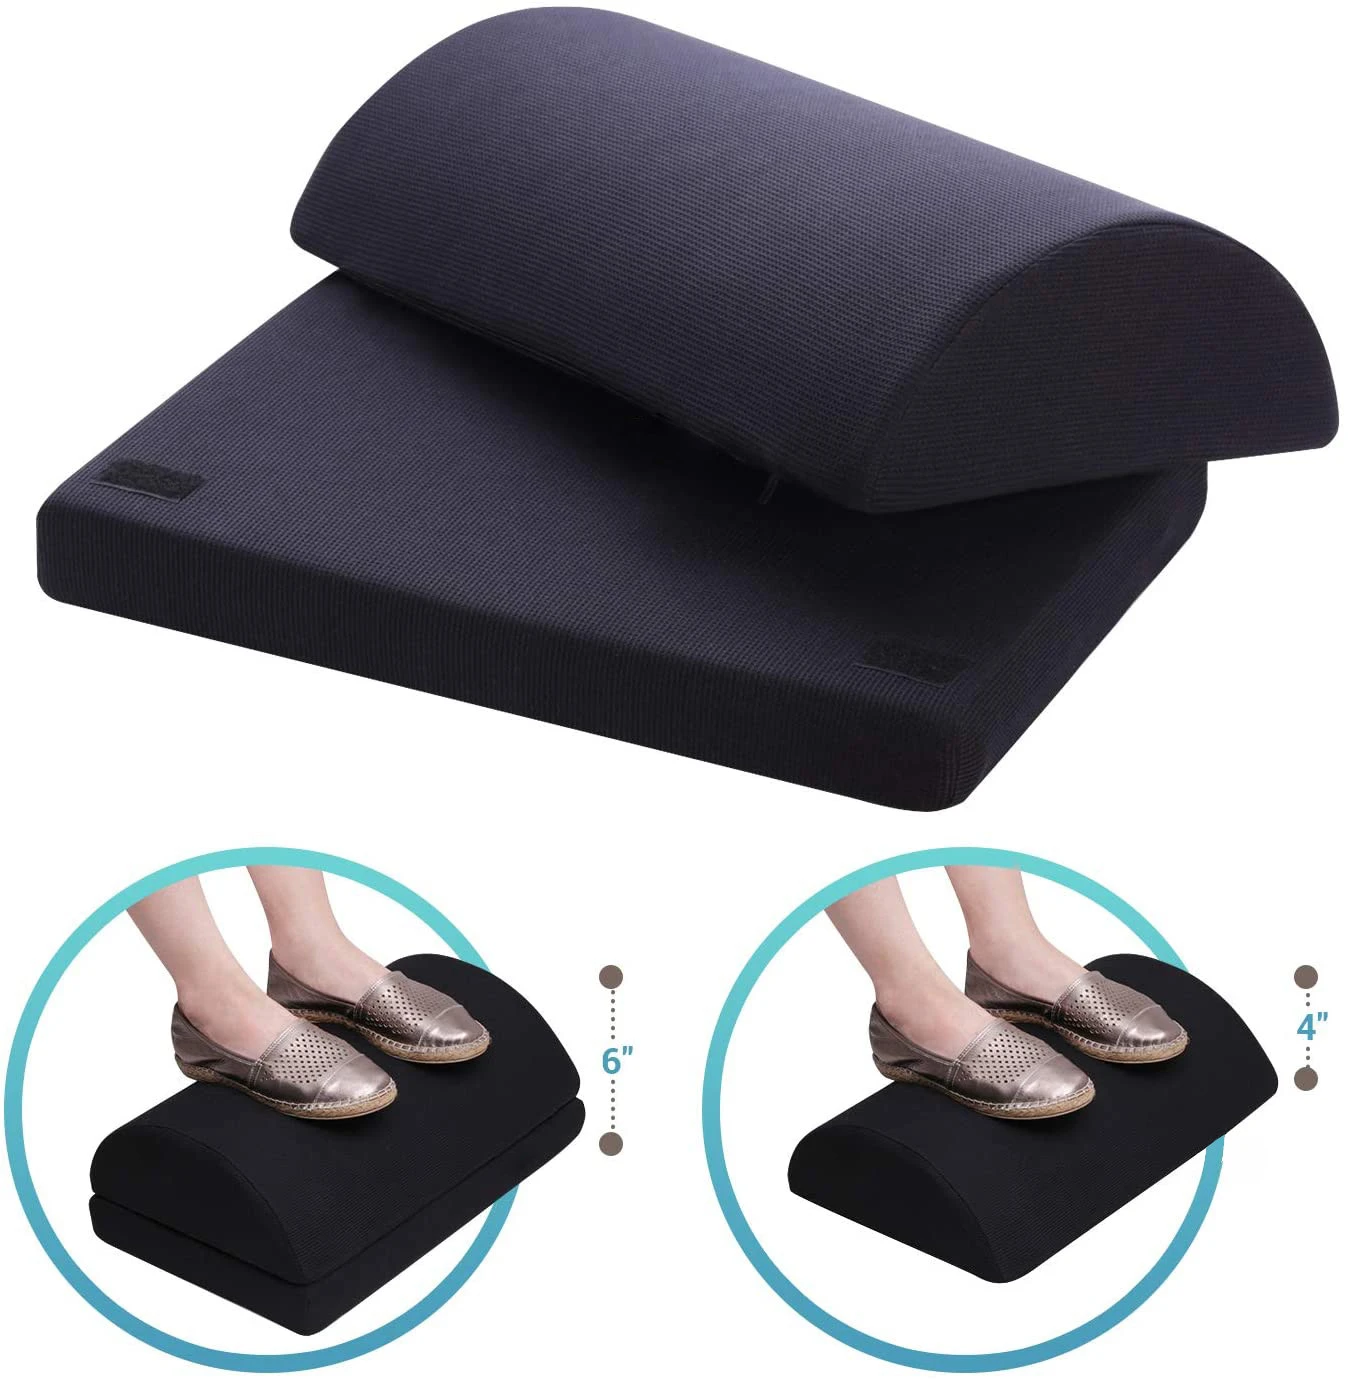 2021 Upgraded Premium Half Moon Cylinder Foot Rest Under Desk with Adjustable Height Soft  Firm Foam Velvet Footrest Cushion